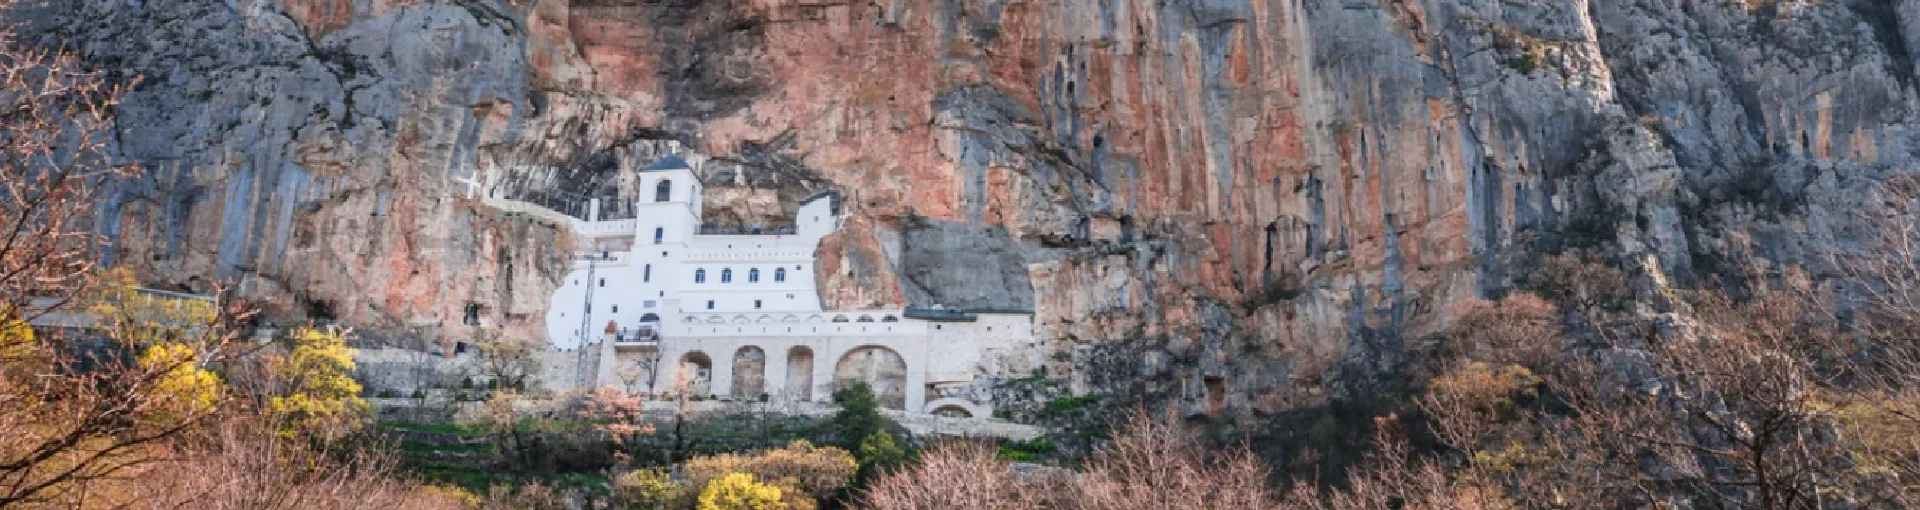 ostrog, montenegro, manastir